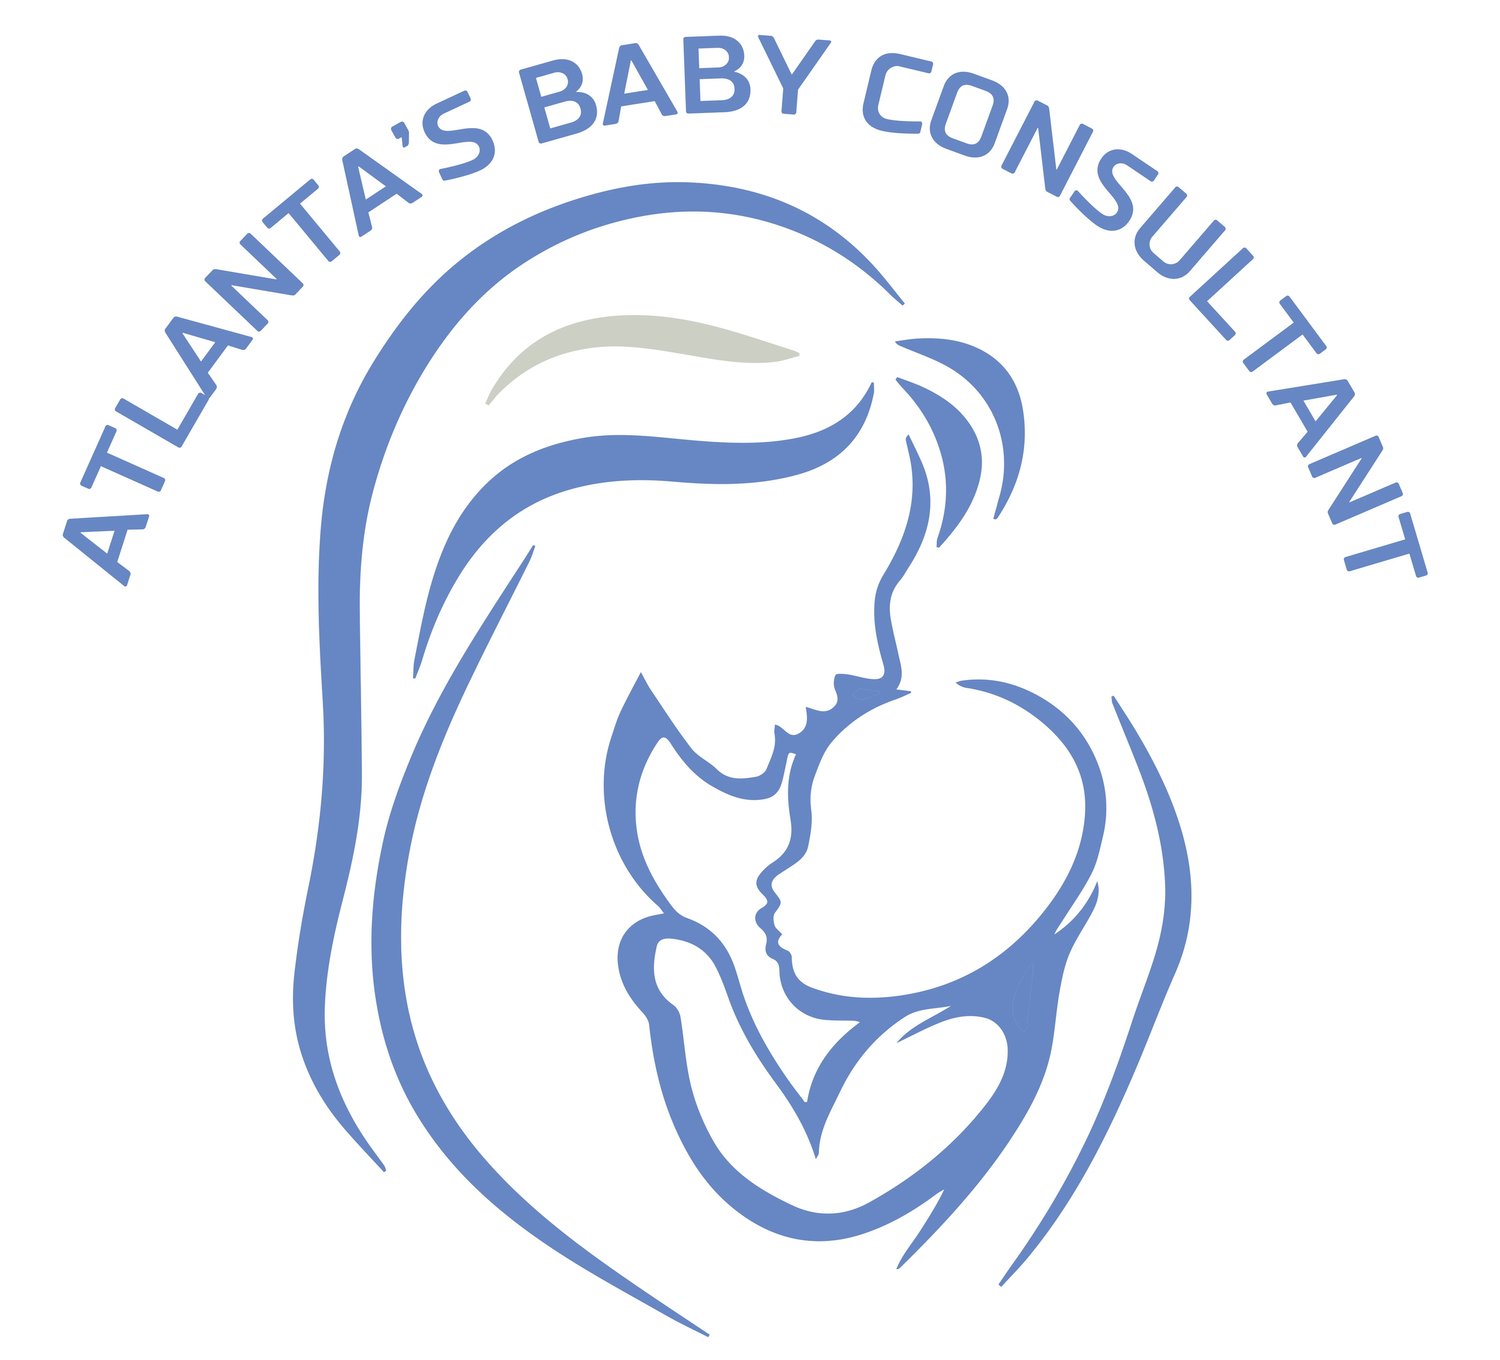 Atlanta's Baby Consultant, LLC.